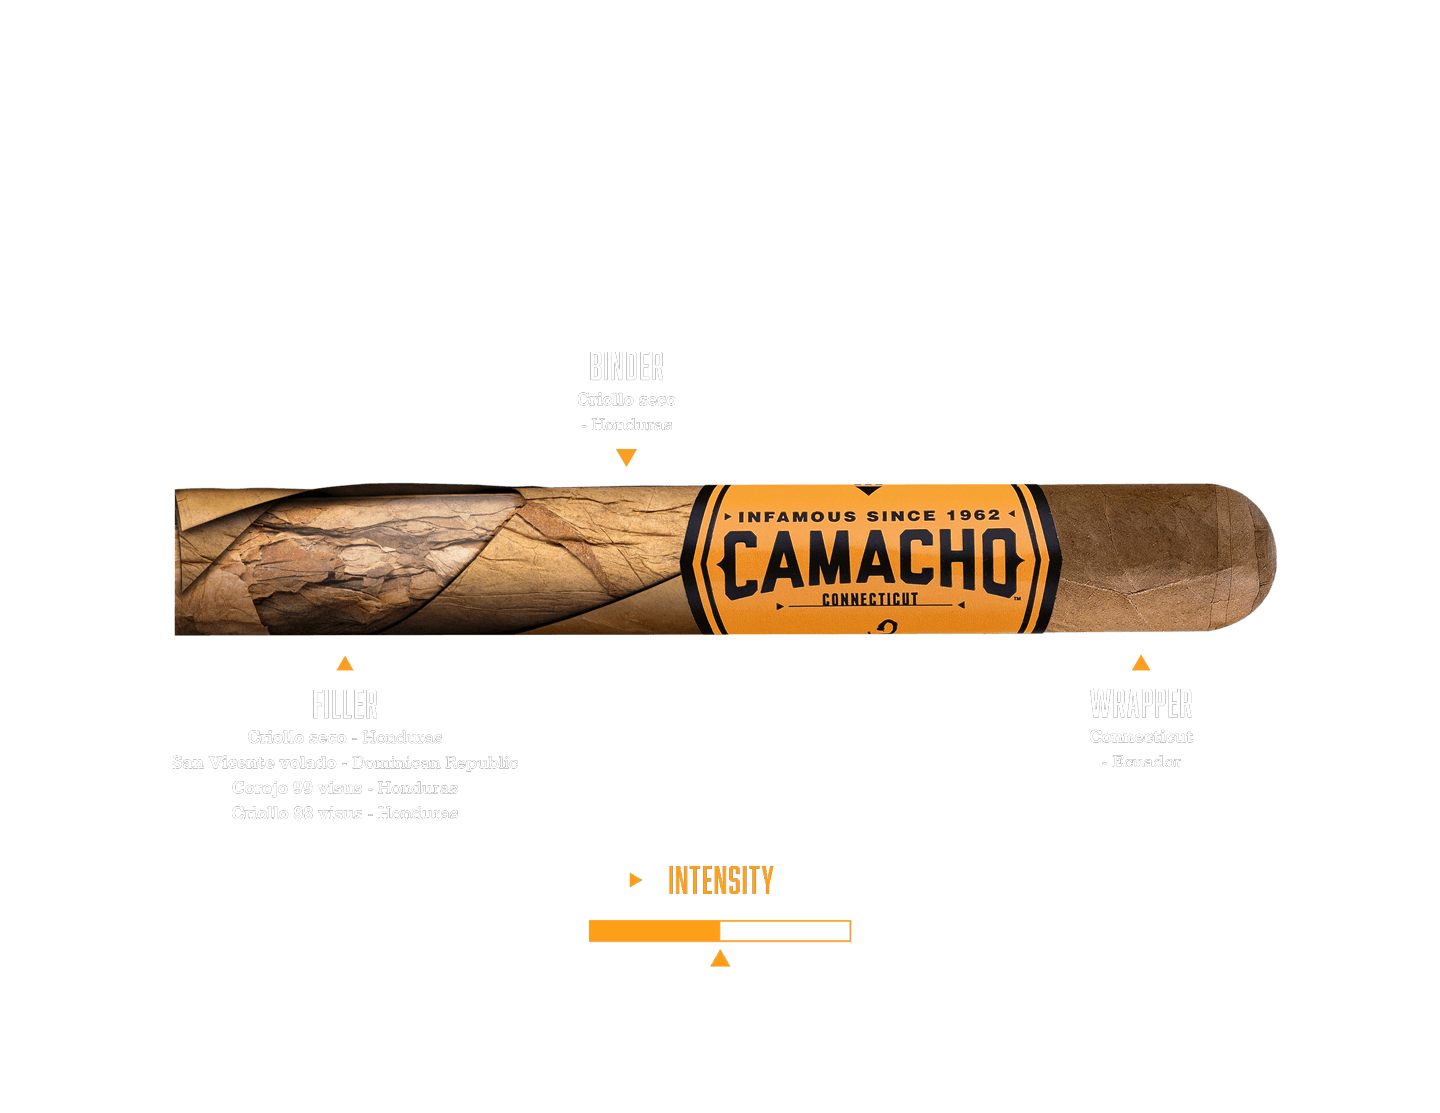 Cigar and blend description of the Camacho Connecticut Cigar